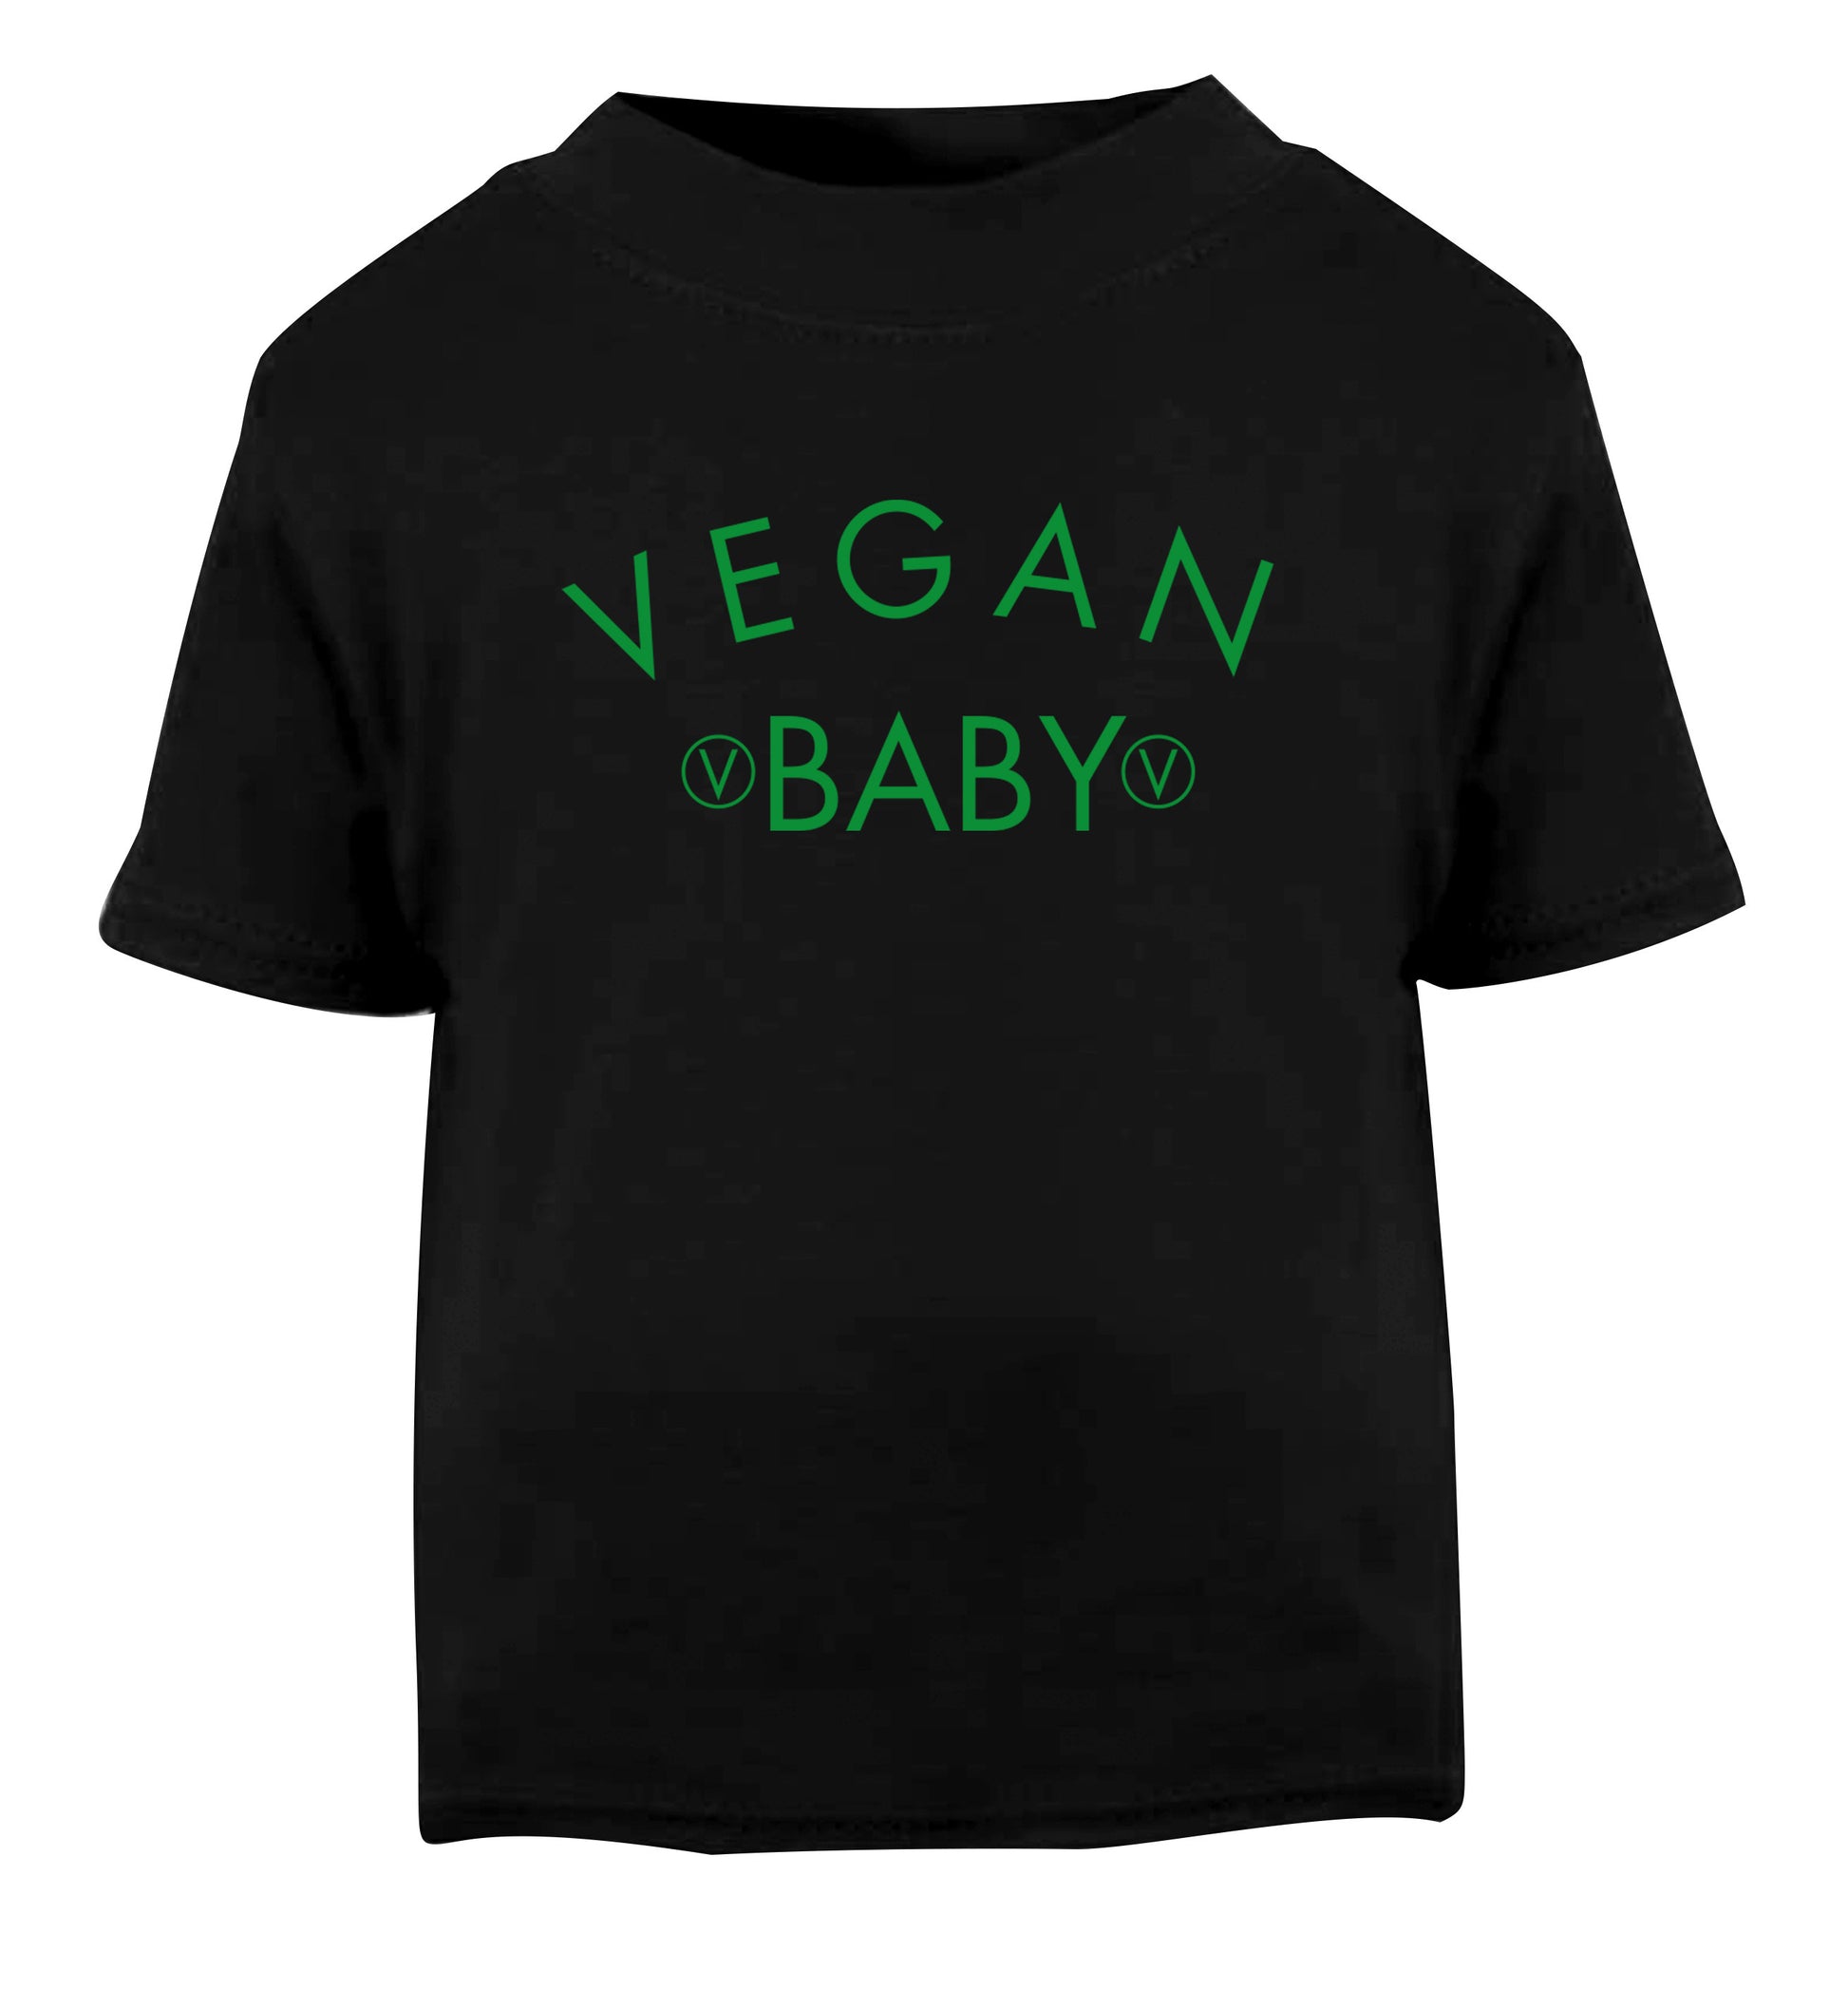 Vegan baby Black Baby Toddler Tshirt 2 years